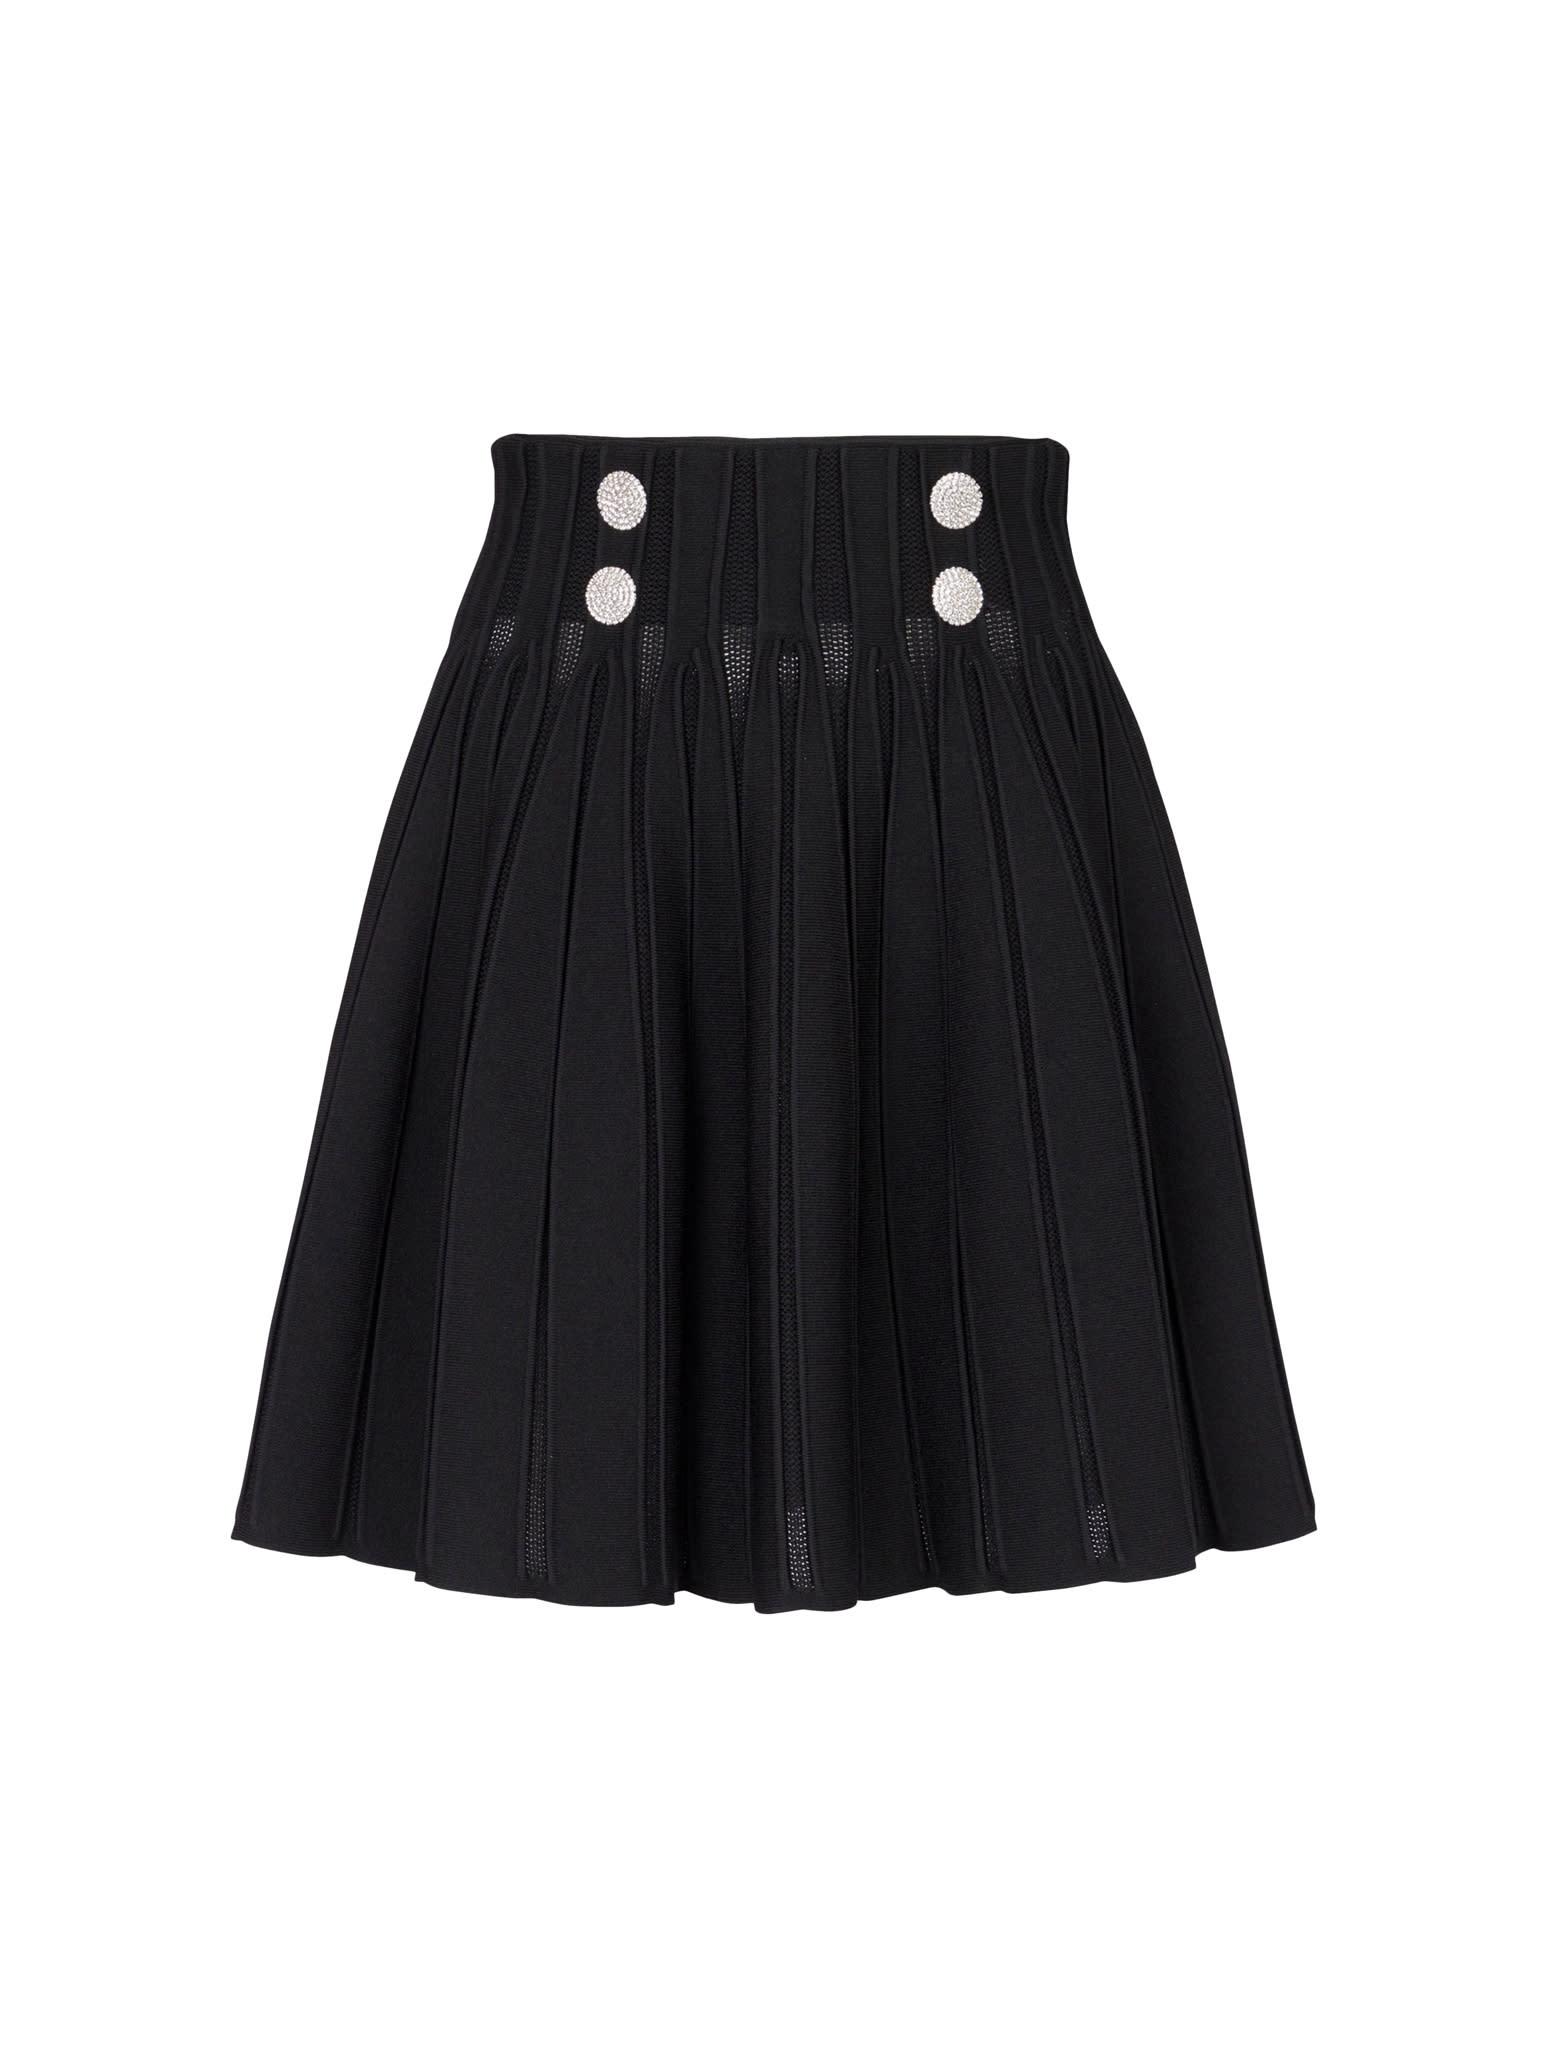 Shop the LM Poplin Flare Skirt by Lee Mathews